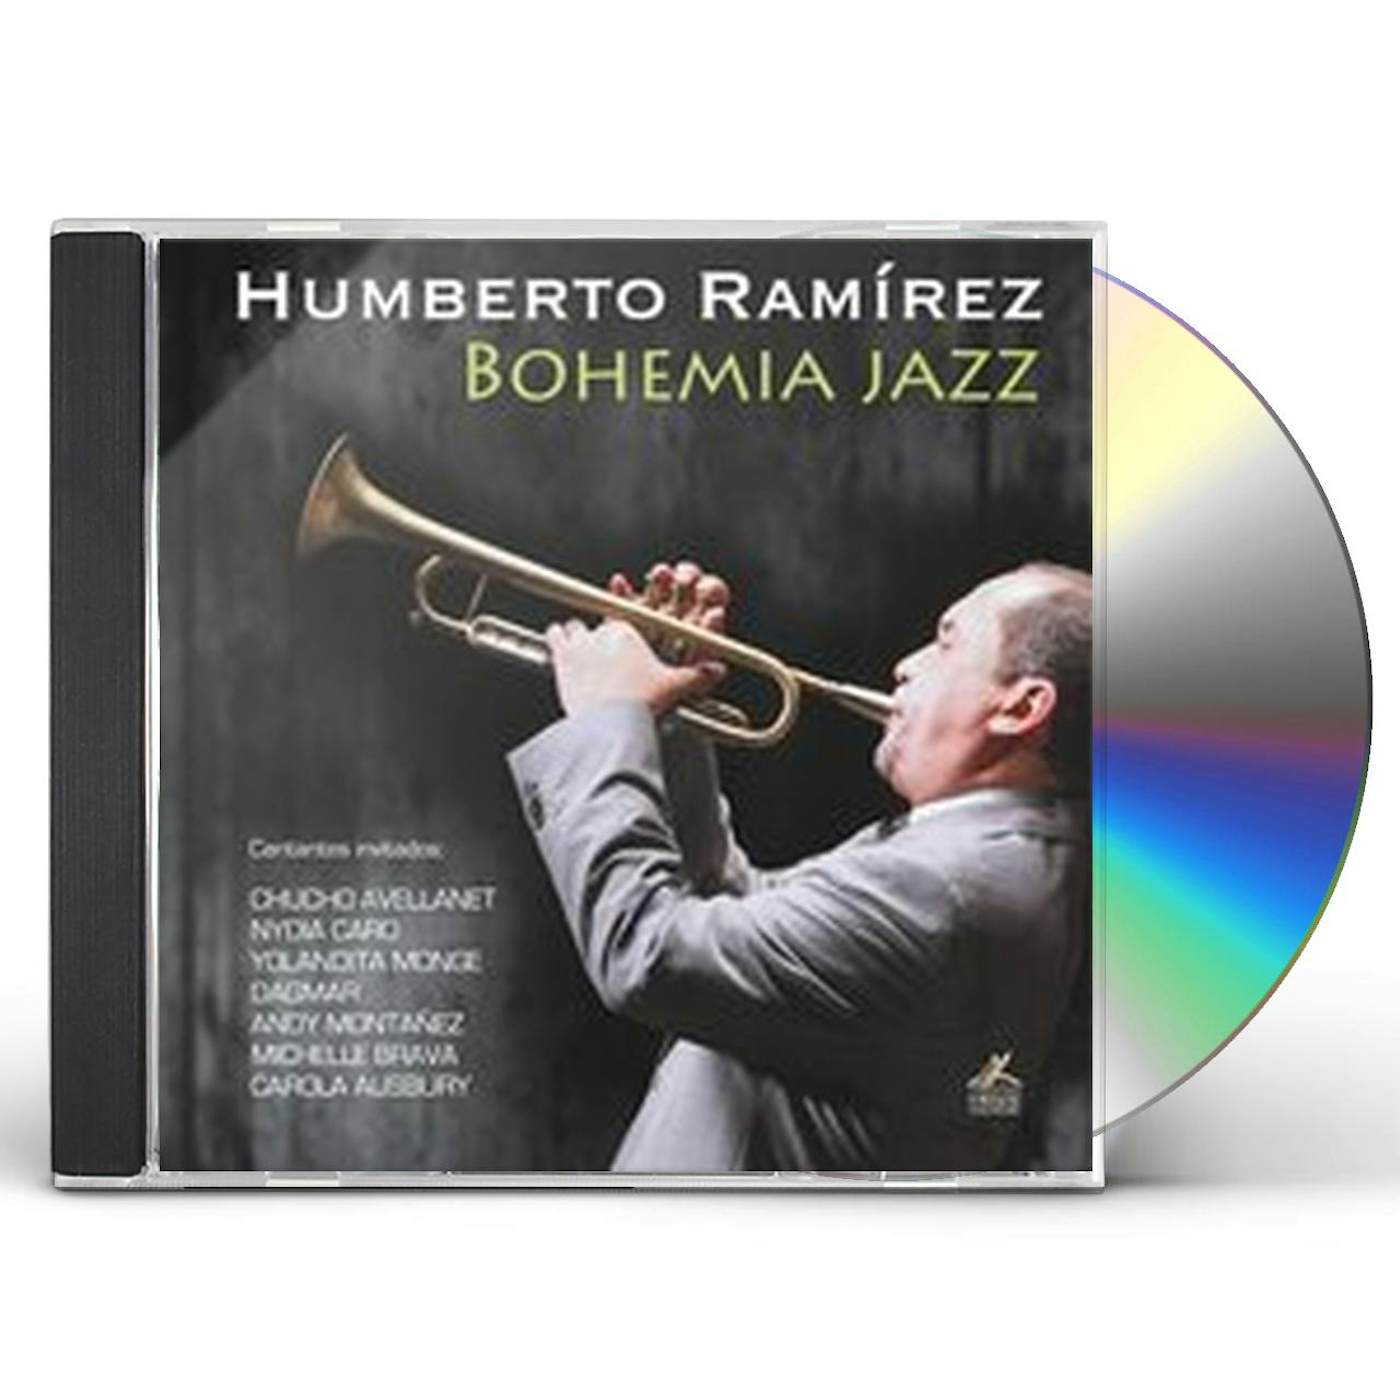 Humberto Ramirez BOHEMIA JAZZ CD